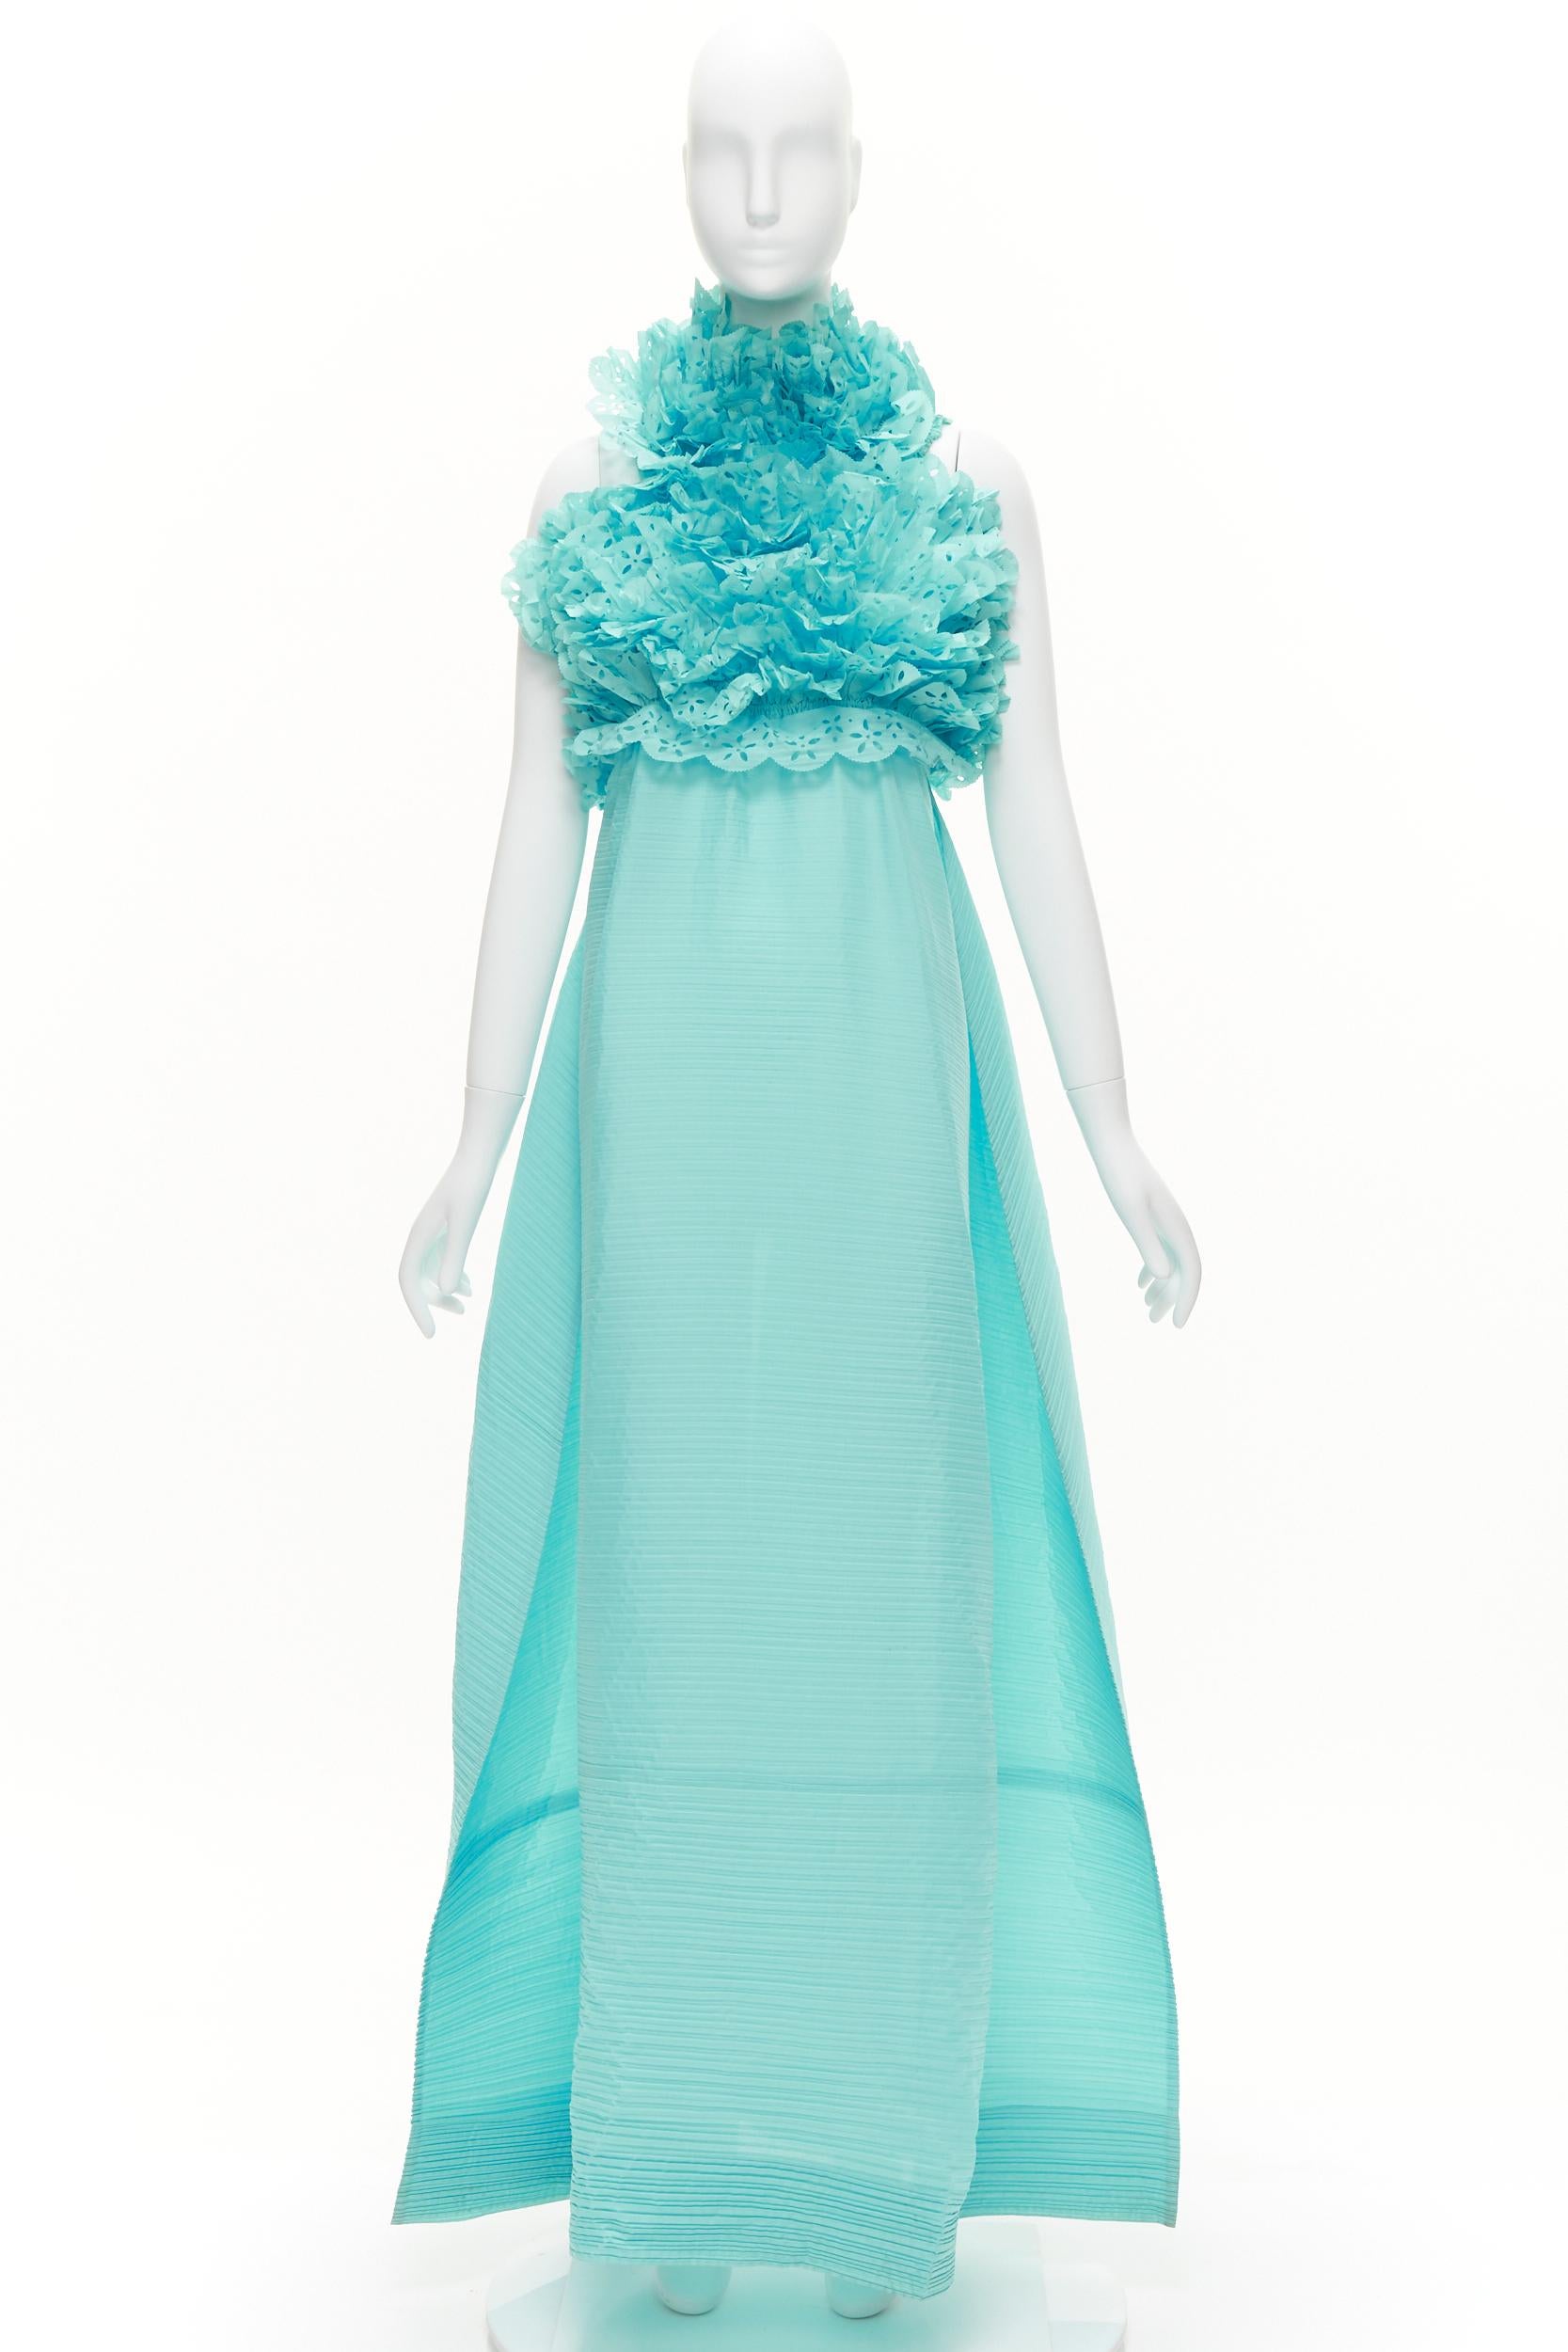 rare ISSEY MIYAKE sky blue laser cut ruffle high neck evening gown dress M 8